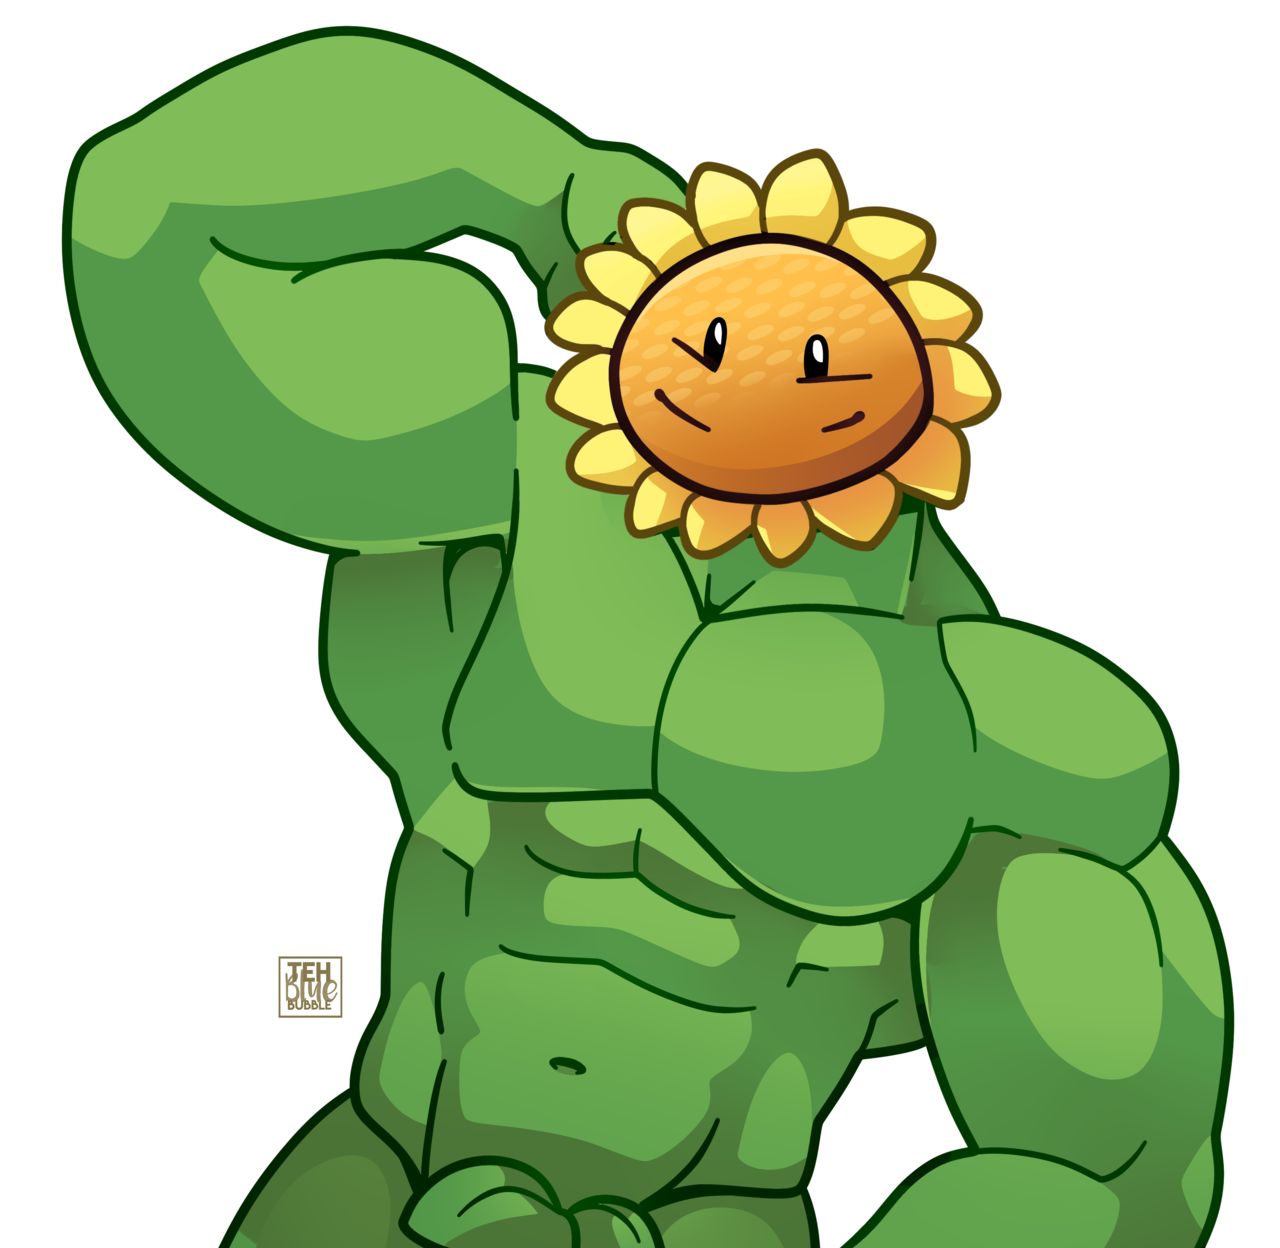 Sunflower. 